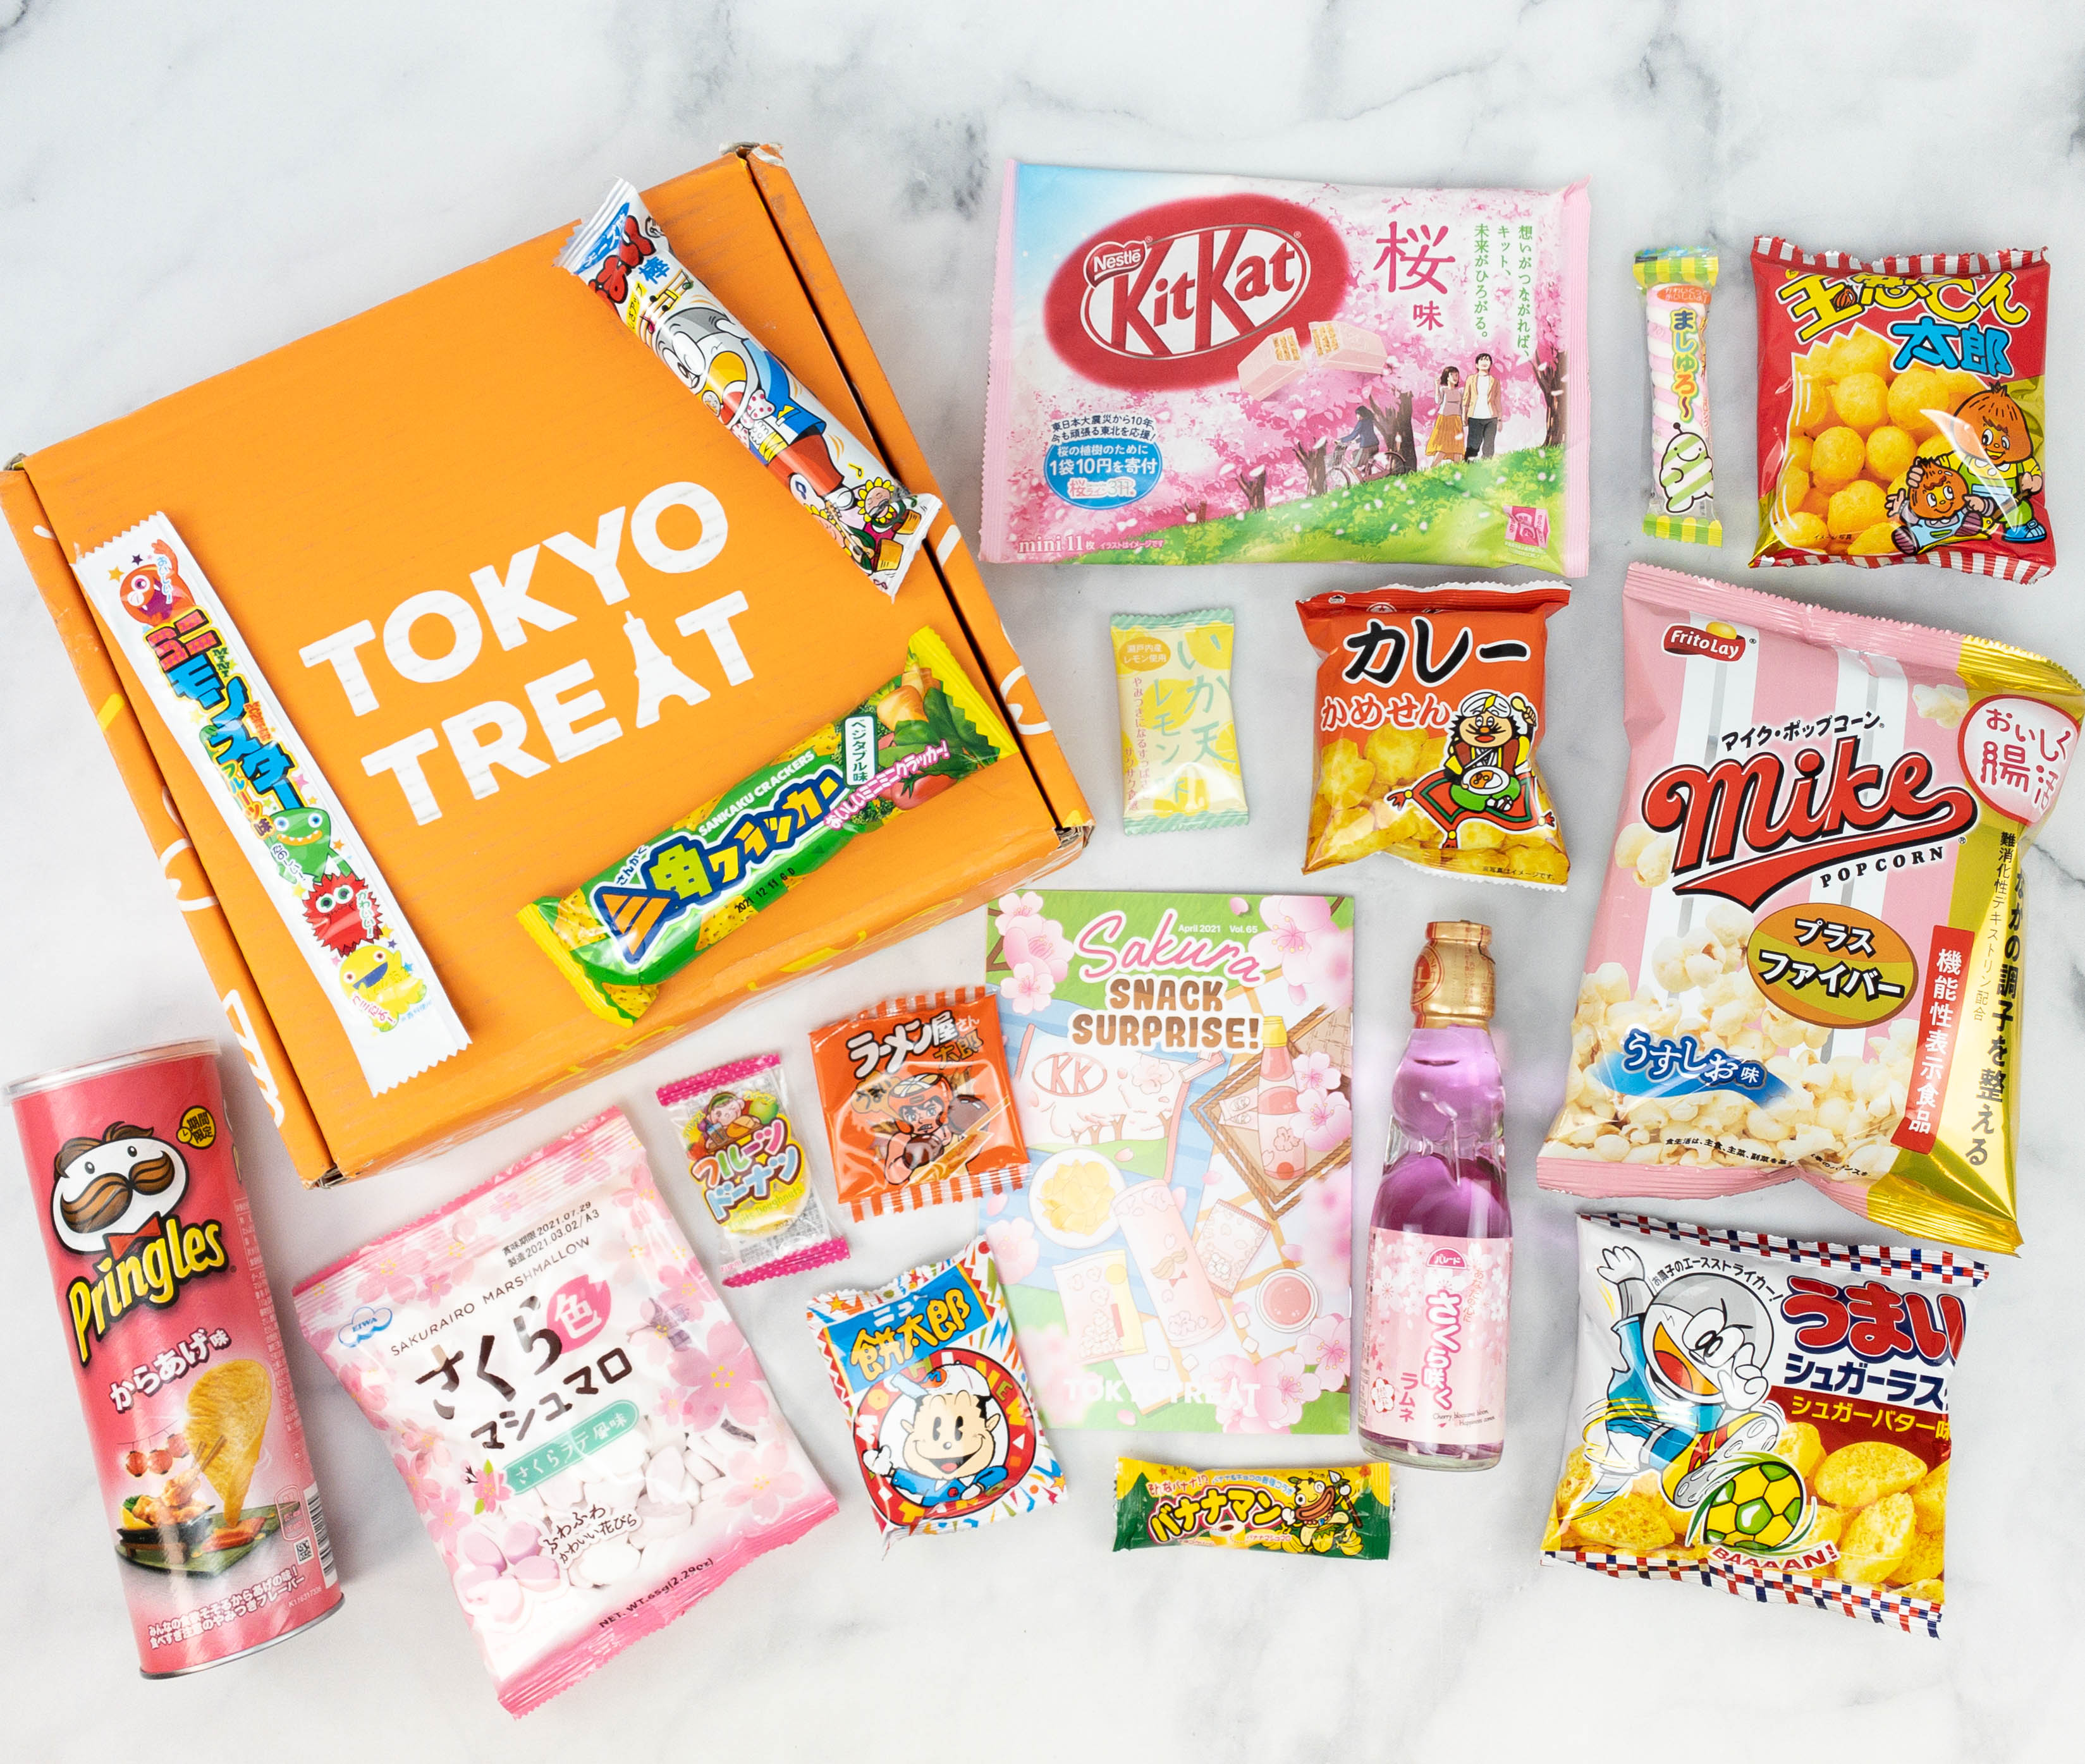 Tokyo Treat Japanese Snack Subscription Review - Snakku